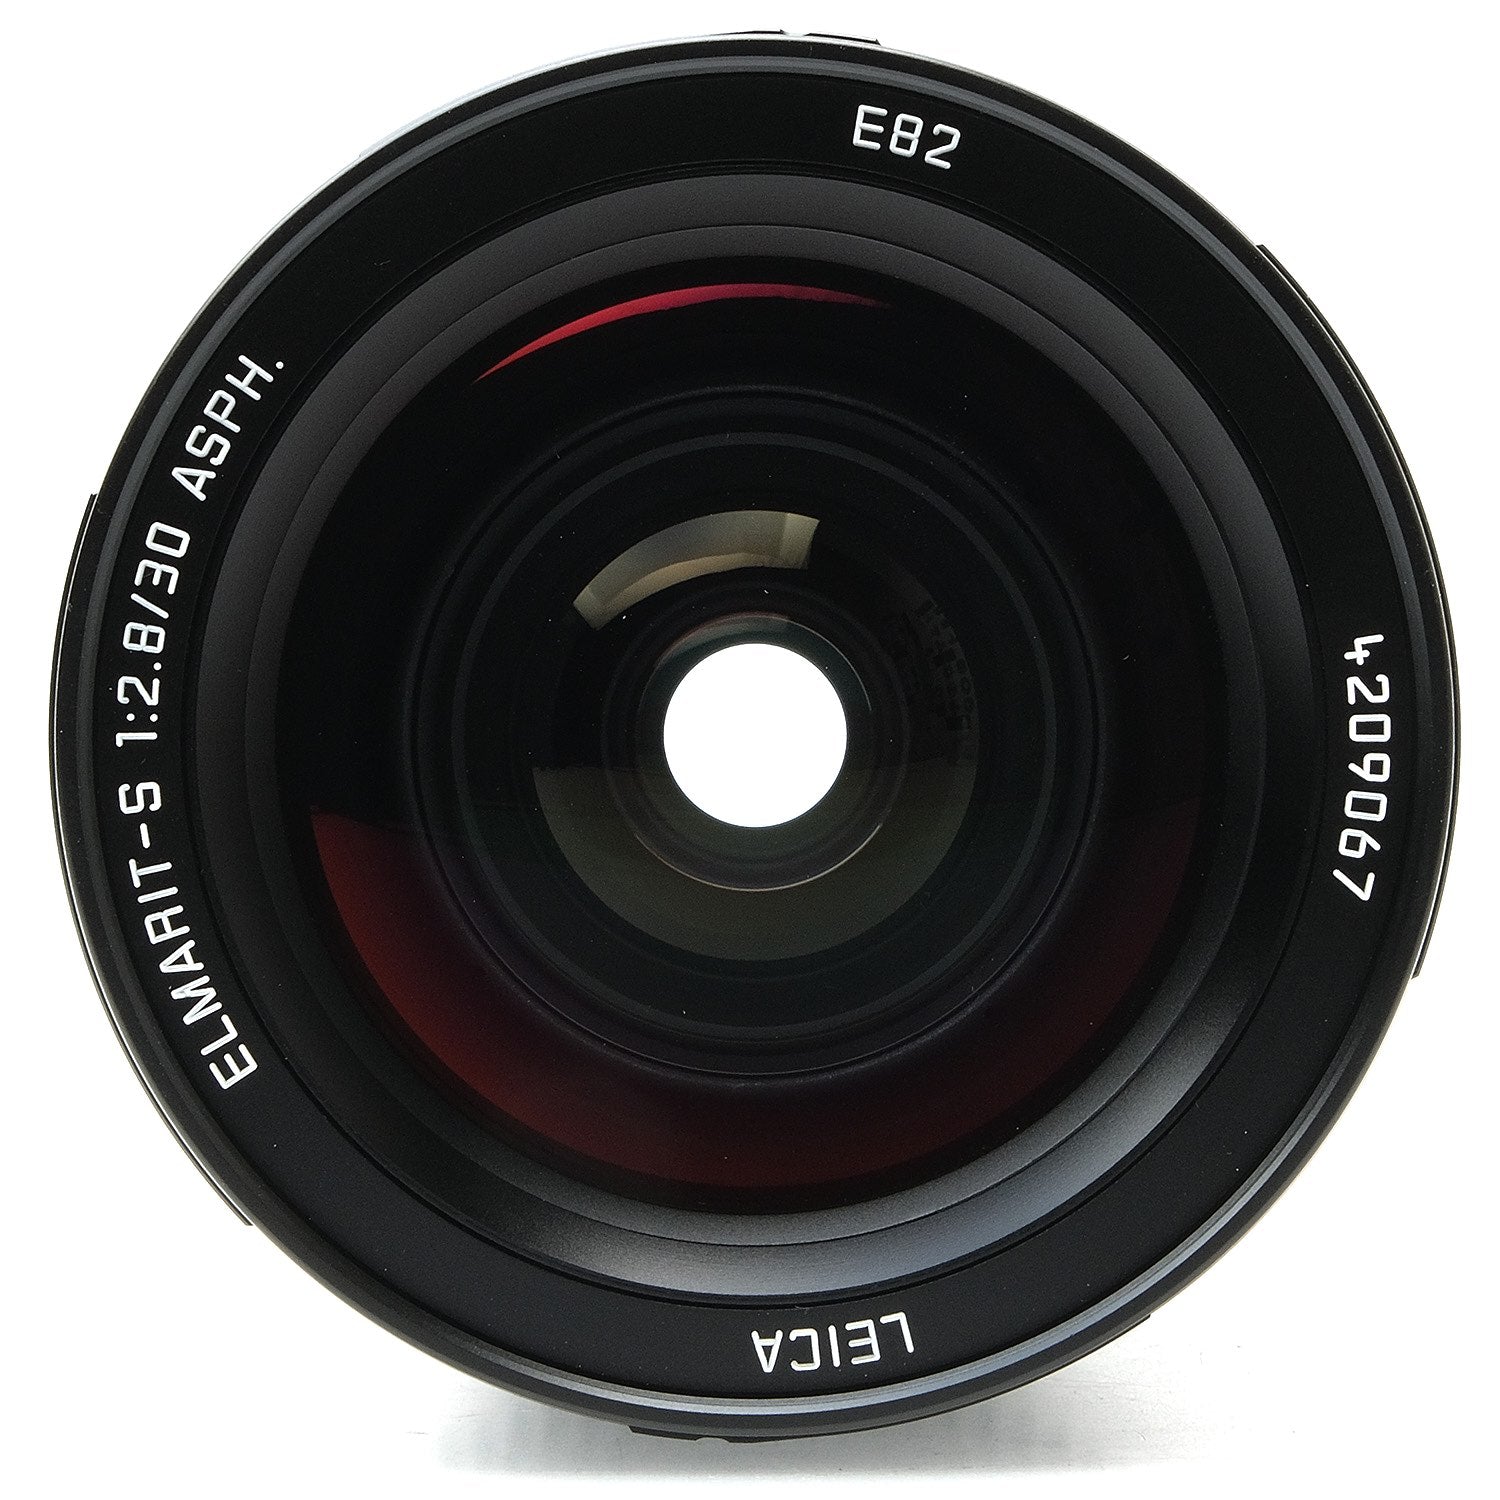 Leica 30mm f2.8 Elmarit-S Asph, Boxed 4209067